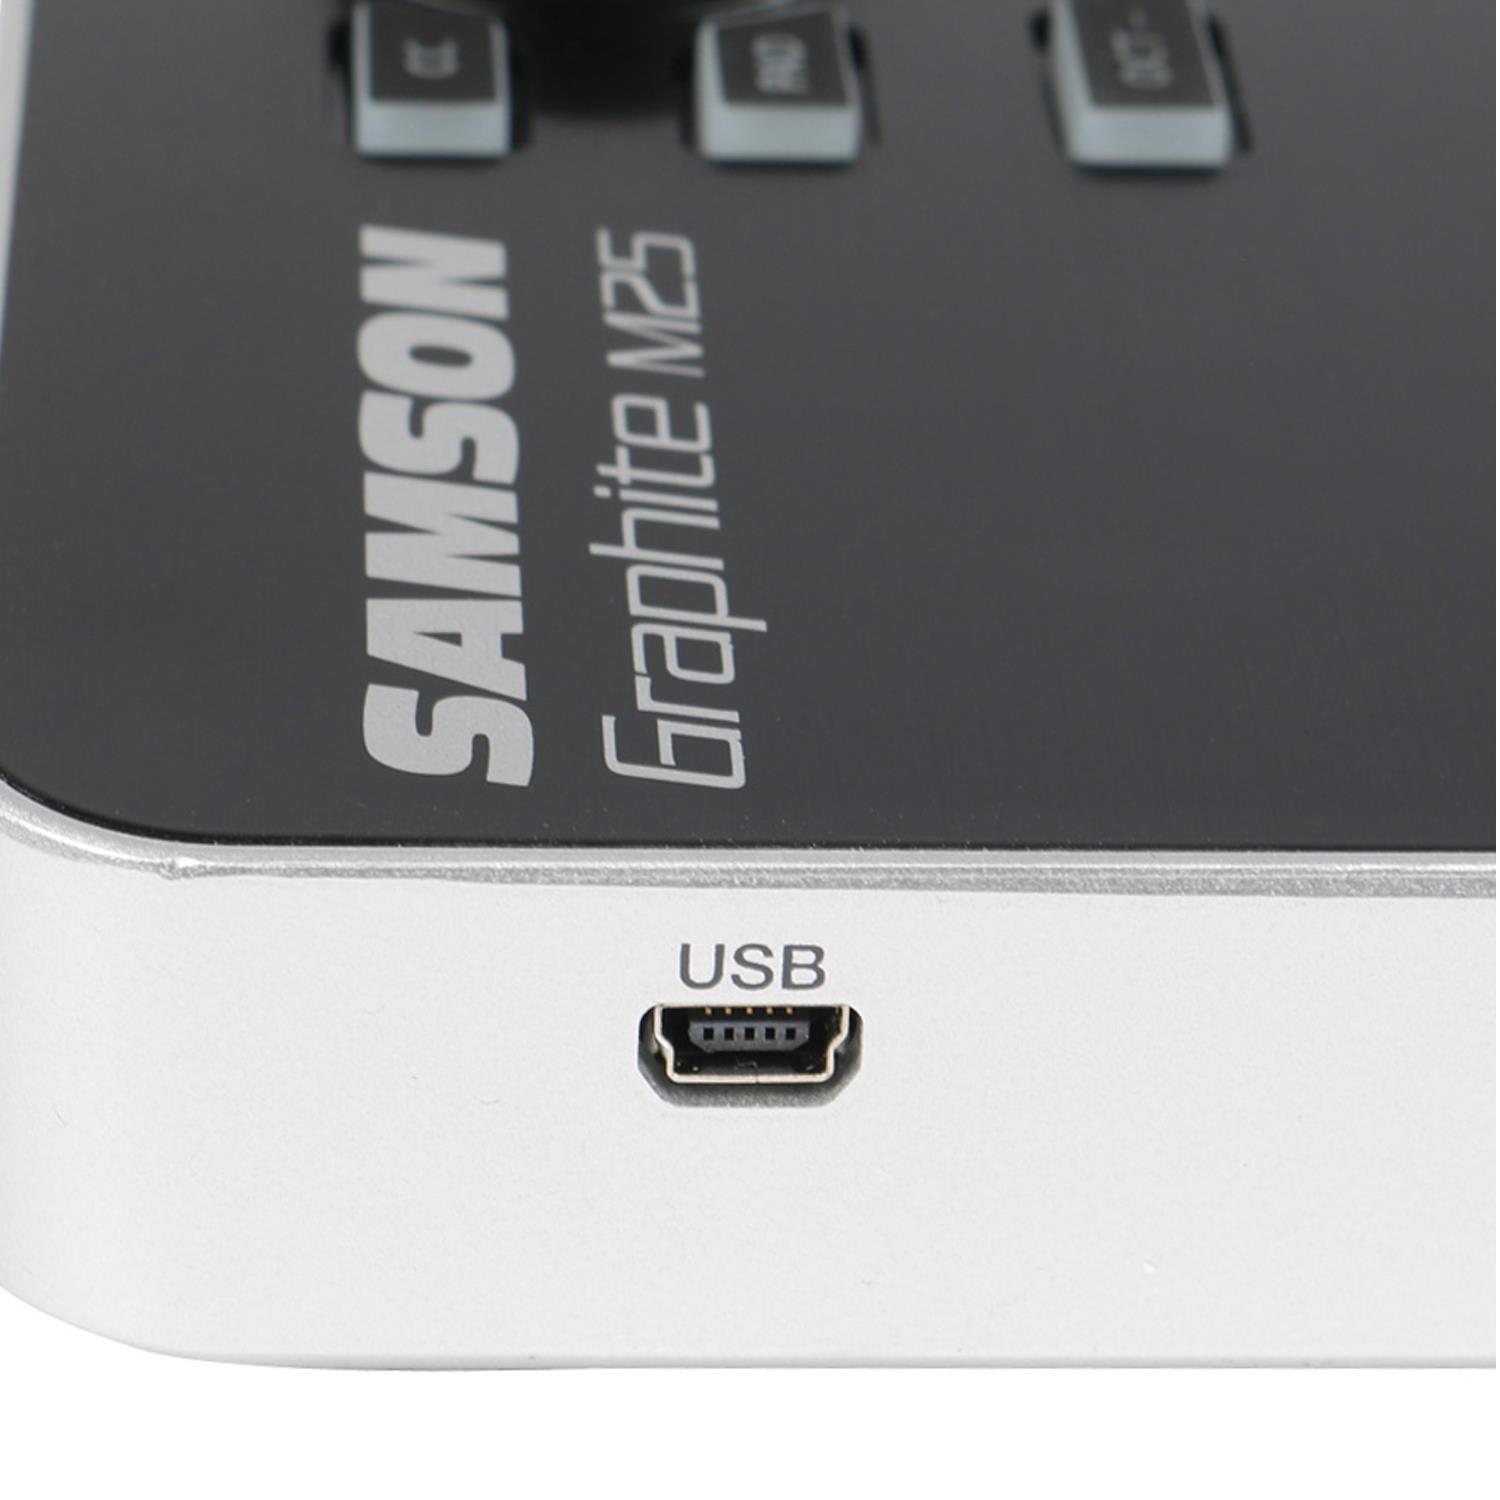 Samson Graphite M25 Mini Keyboard Controller - DY Pro Audio